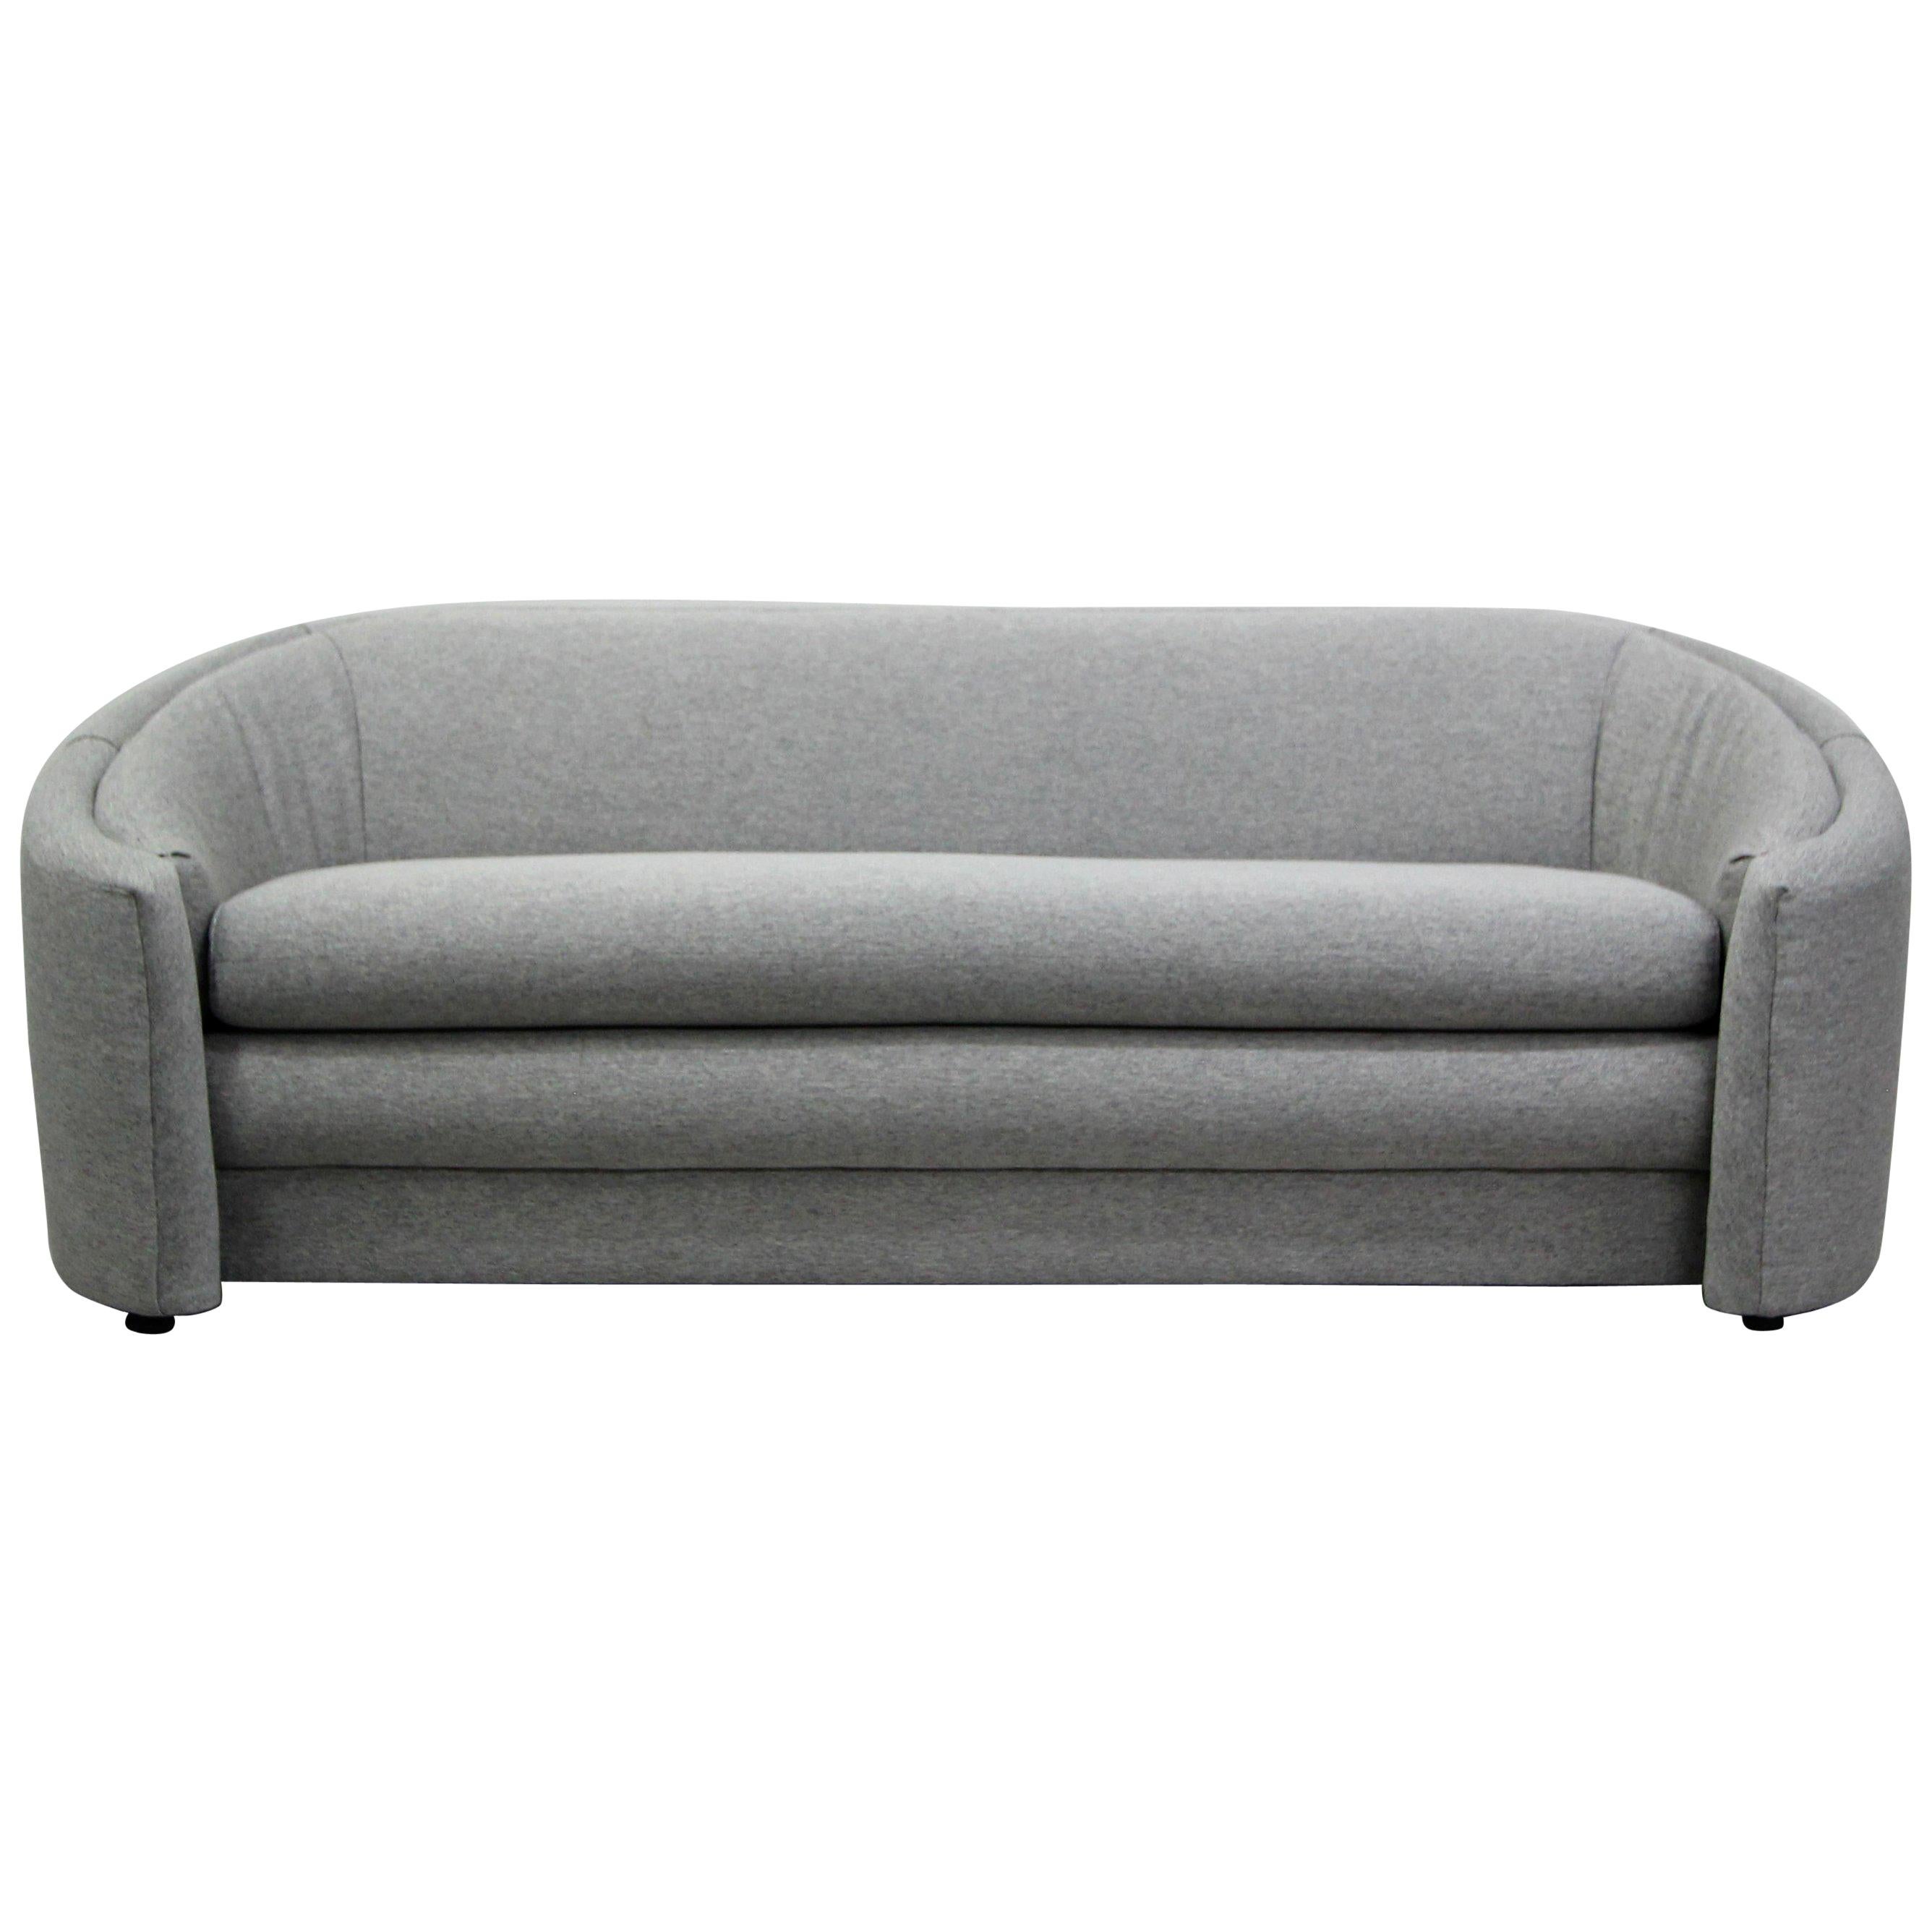 Curved Regency Mid-Century Modern Sofa